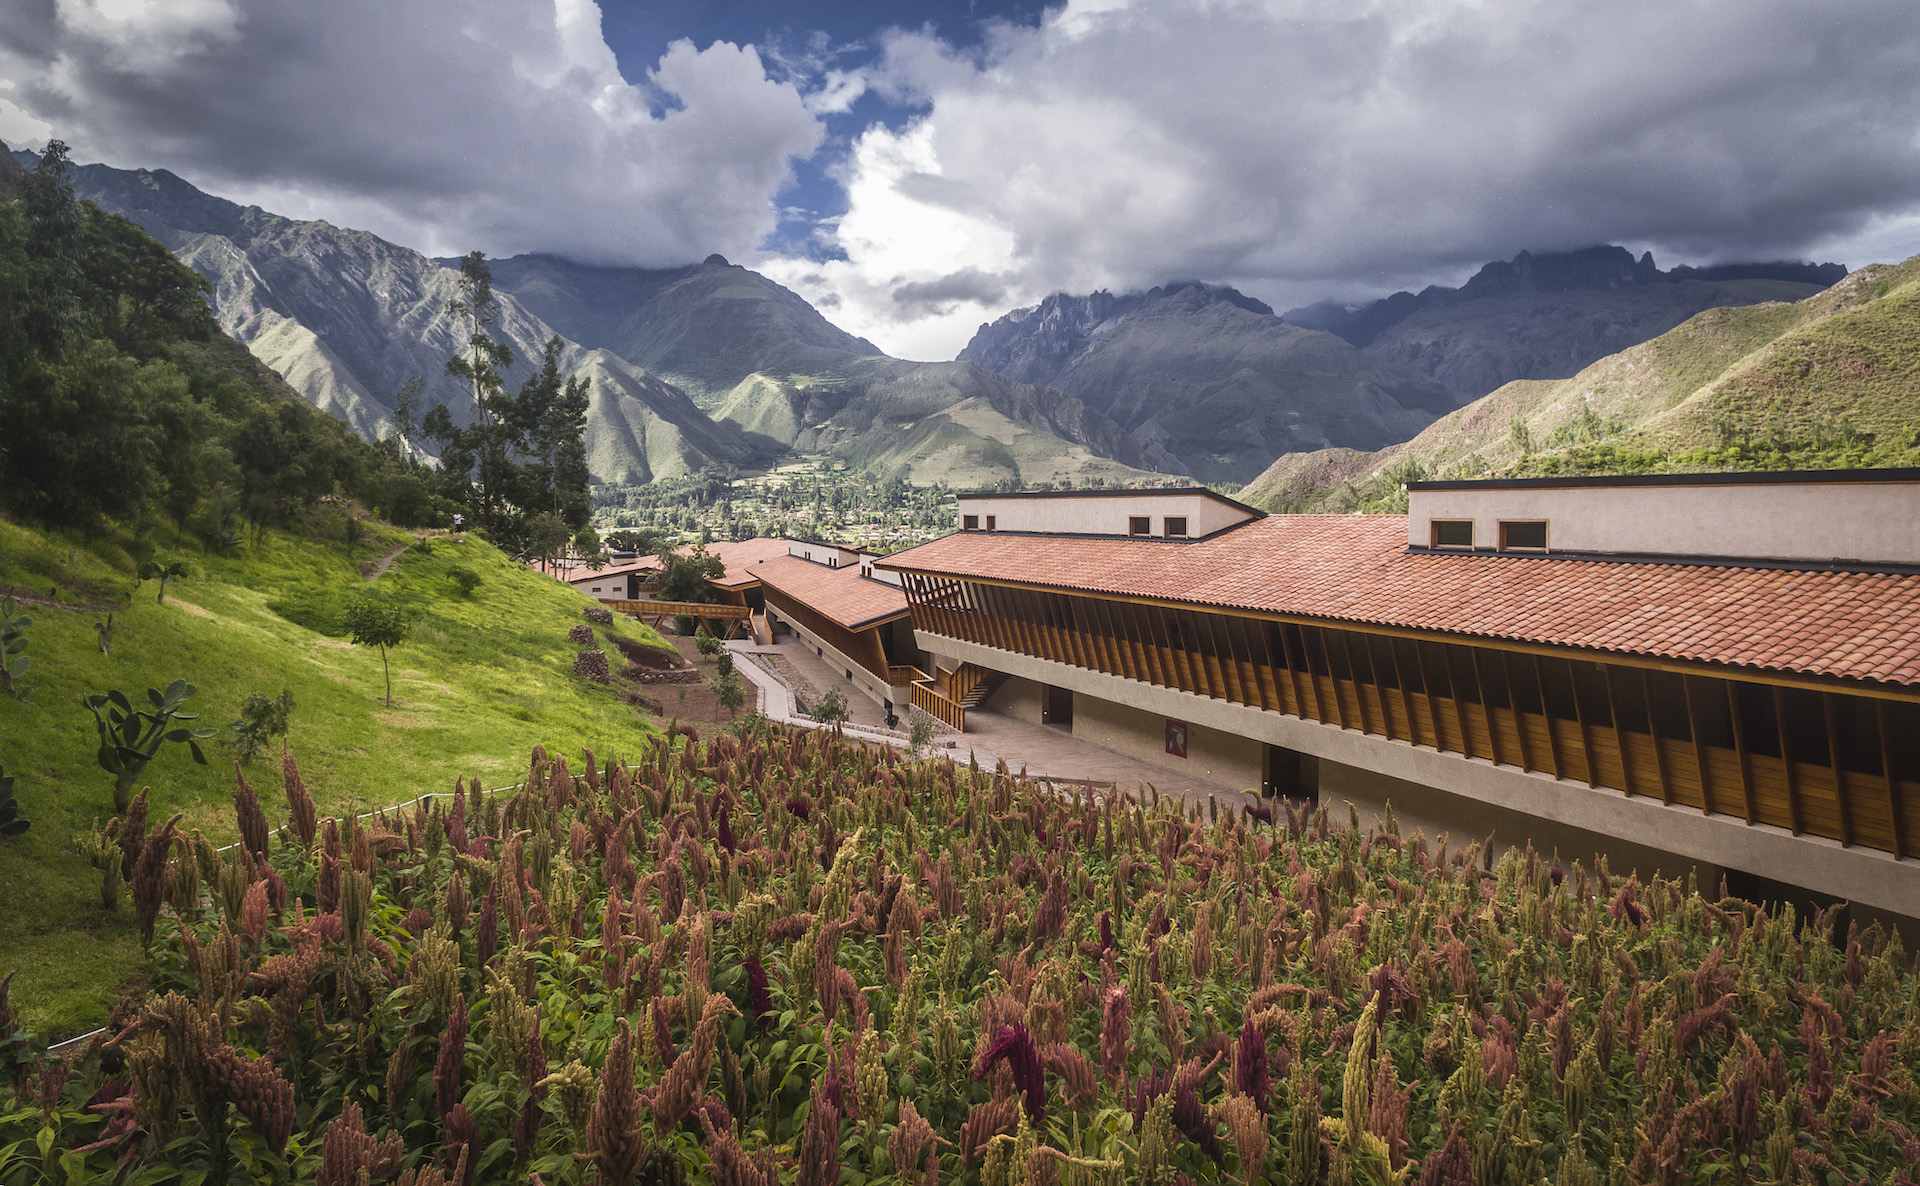 Undurraga hotel overlooking a south american mountain range